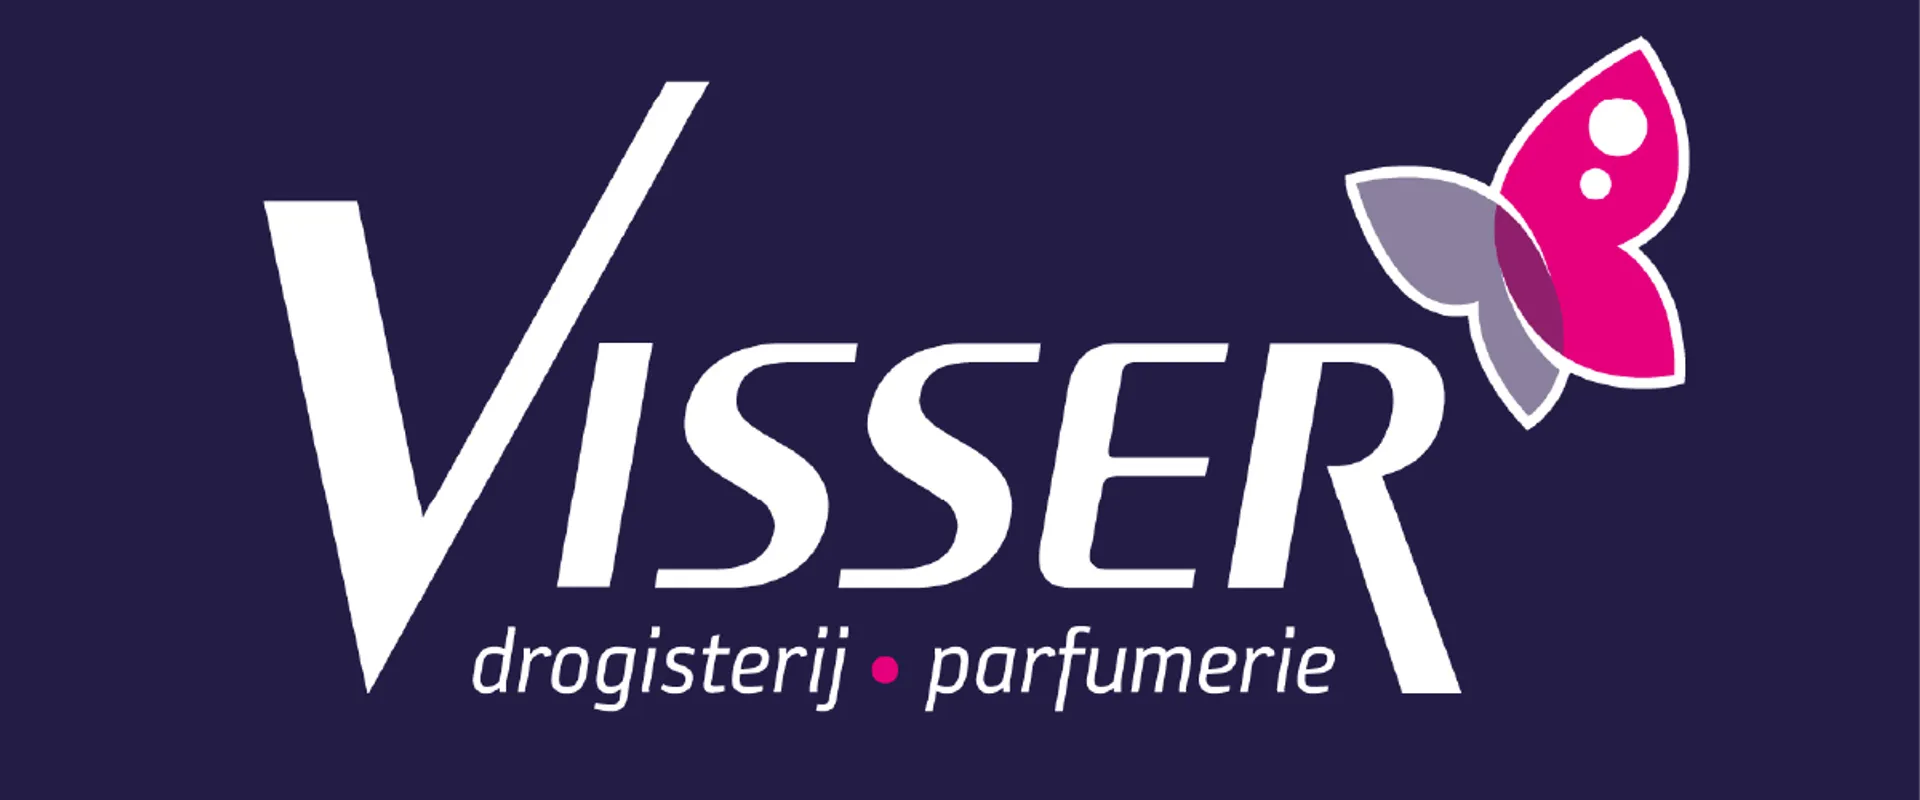 DROGISTERIJ VISSER logo